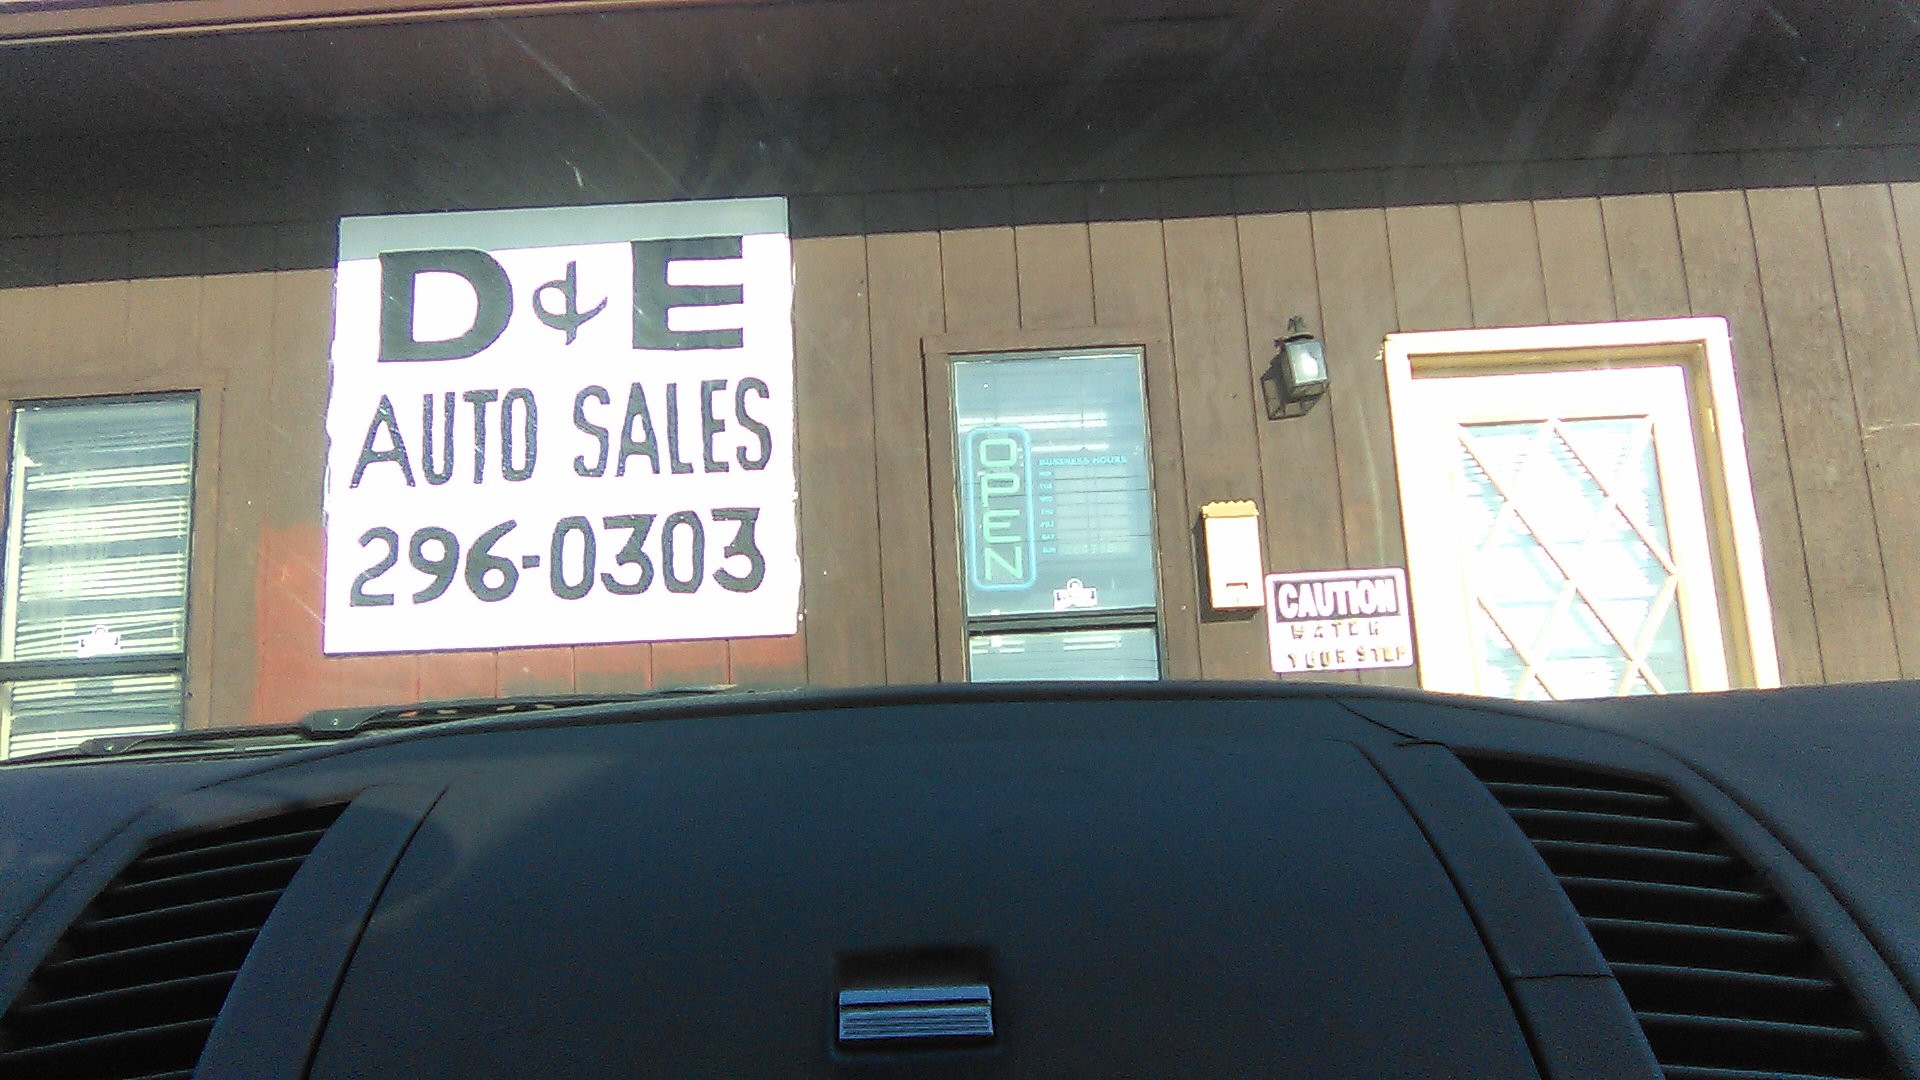 D & E Auto Sales